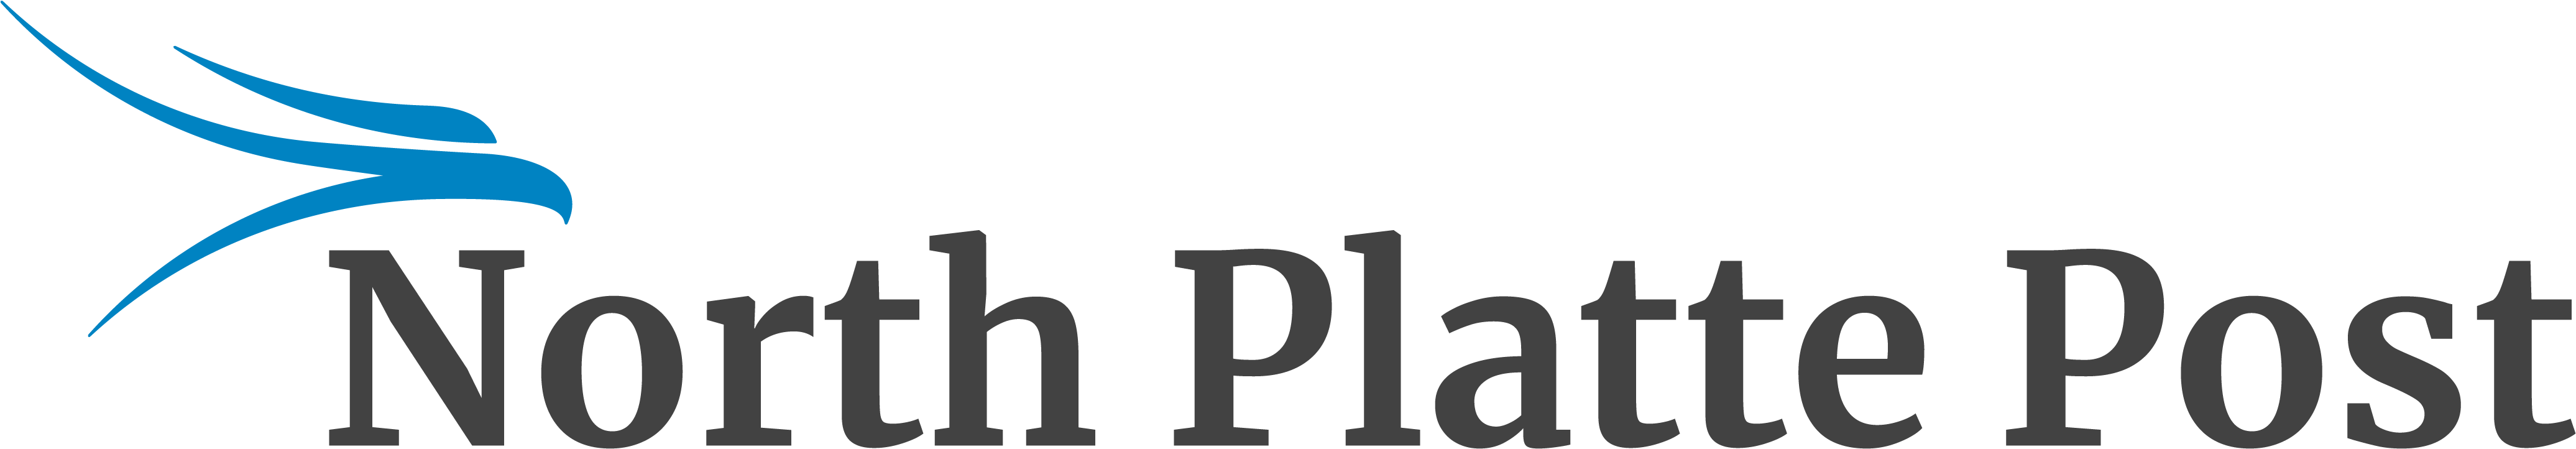 North Platte Post logo